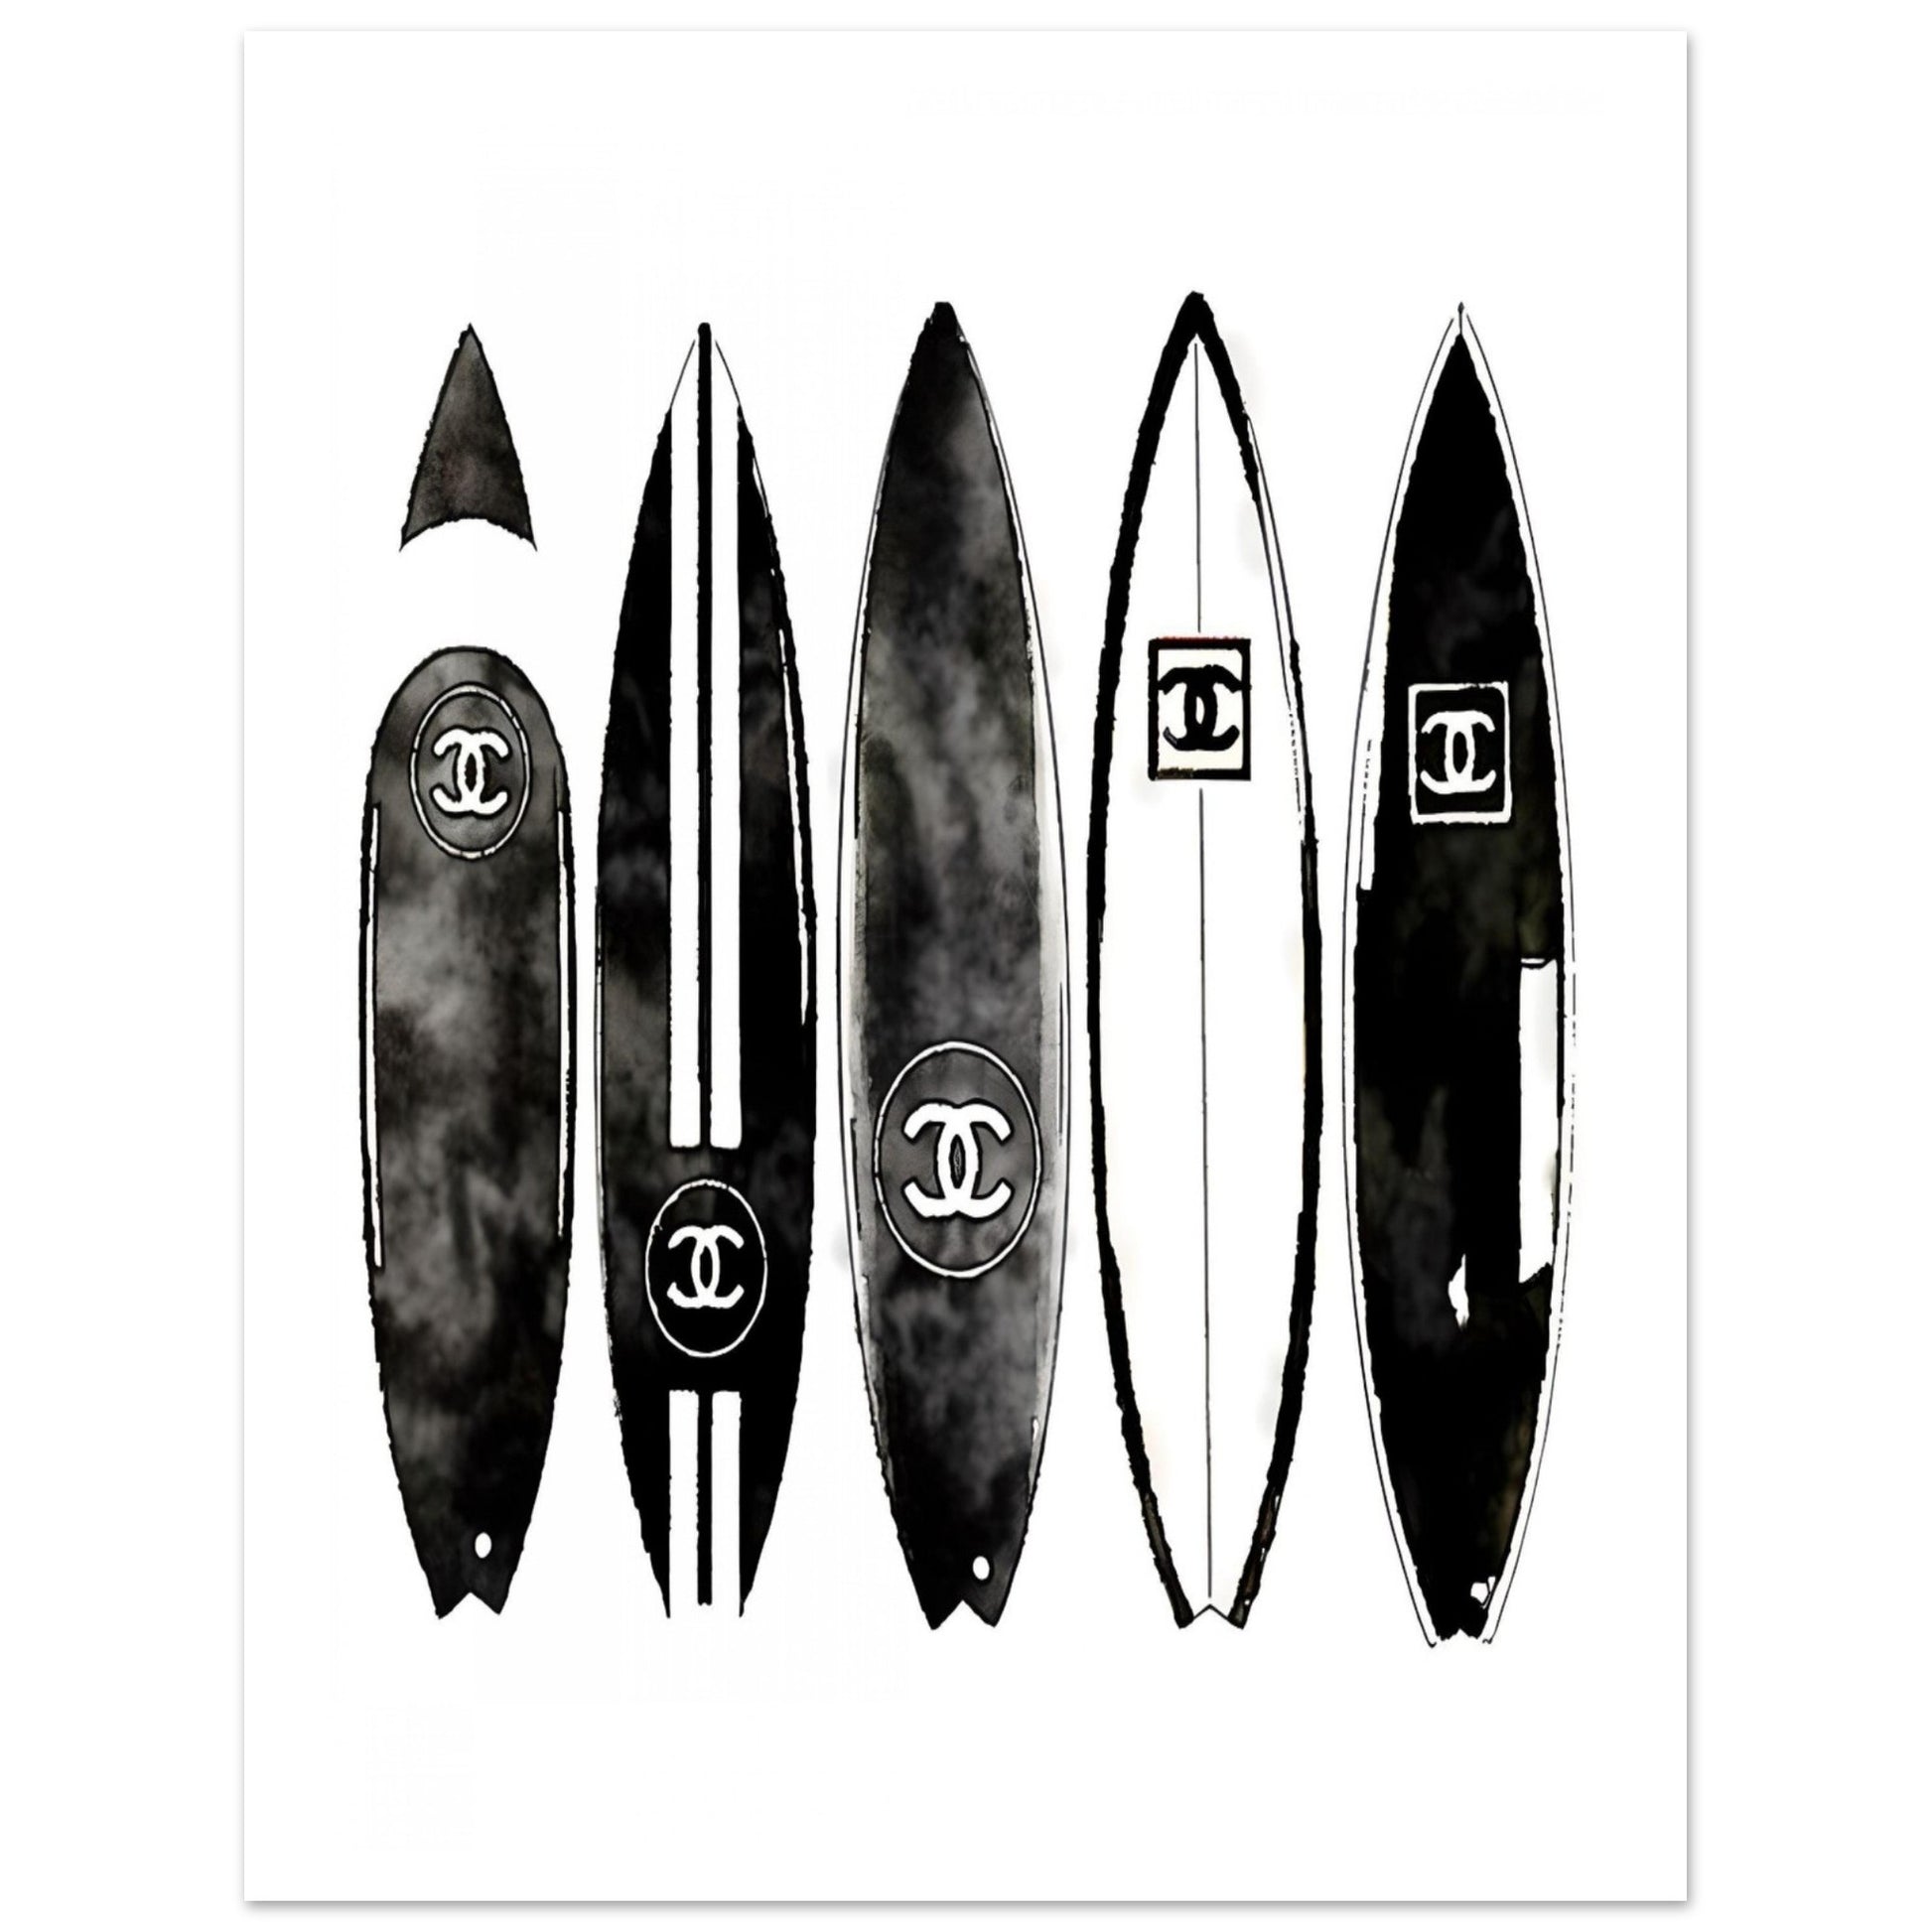 Black White Surfboard: Chanel poster - limitless together online